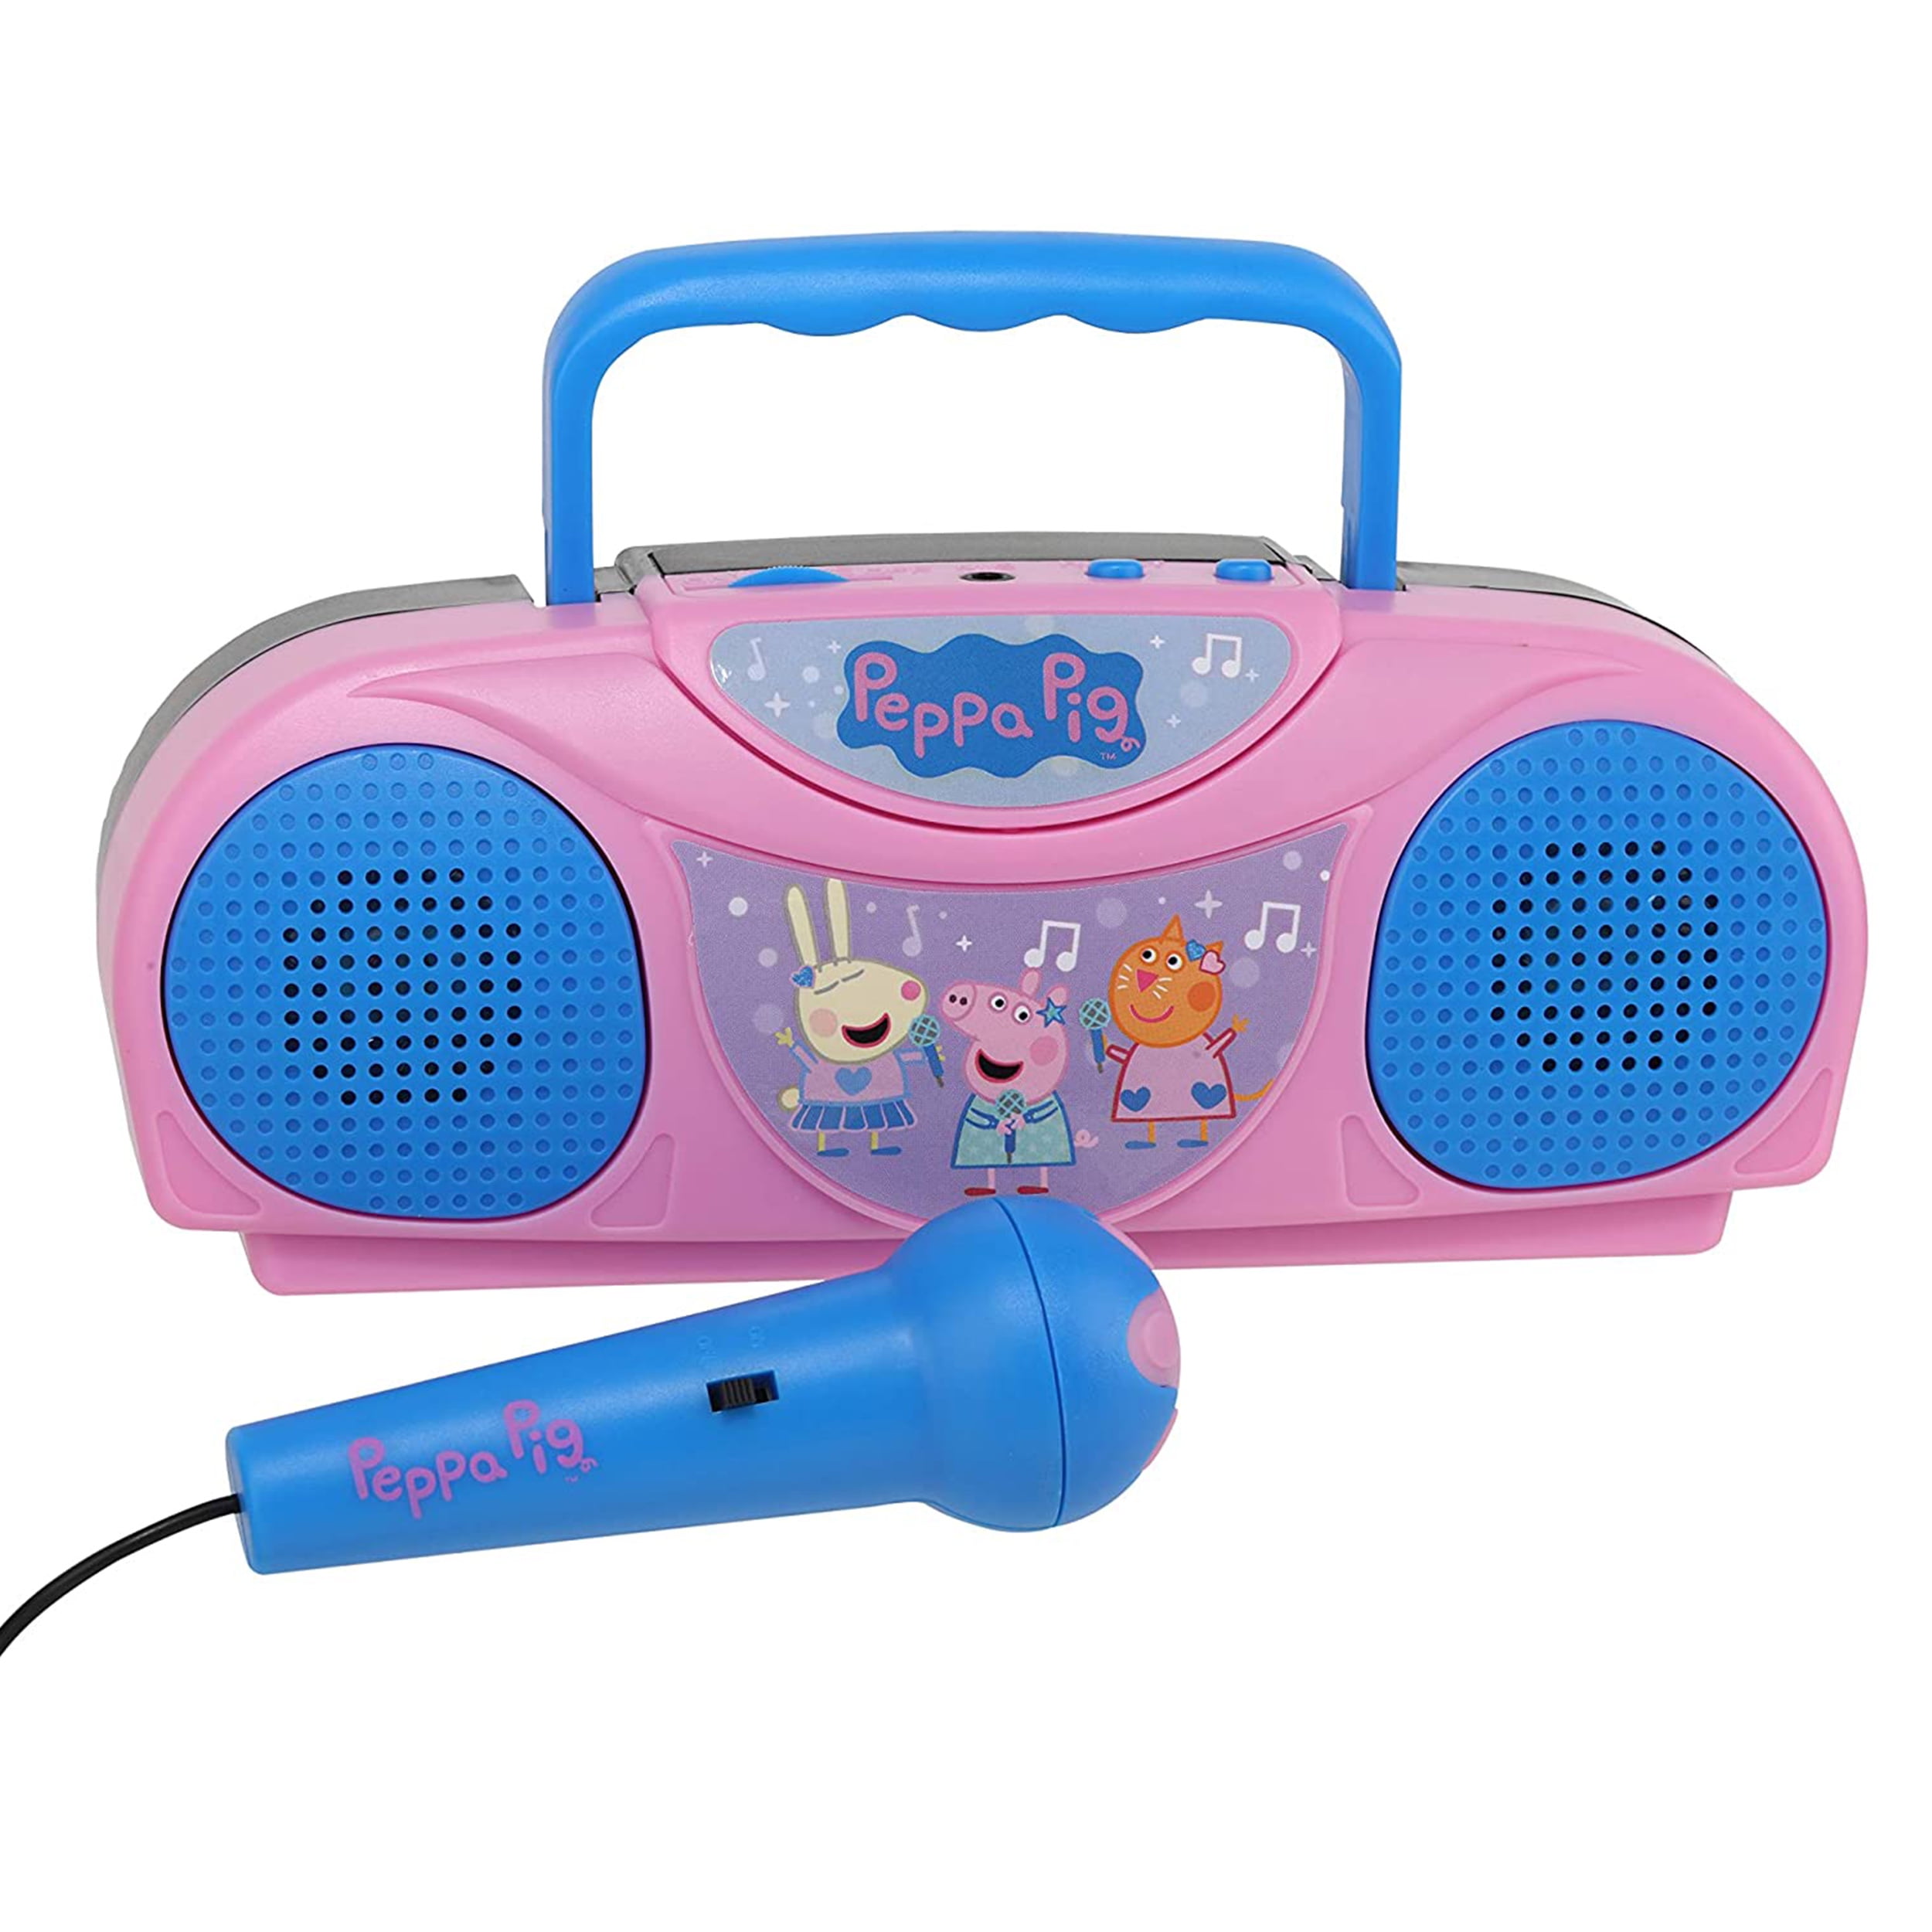 The Singing Machine Glow, SML2200, Bluetooth CDG Karaoke Machine 